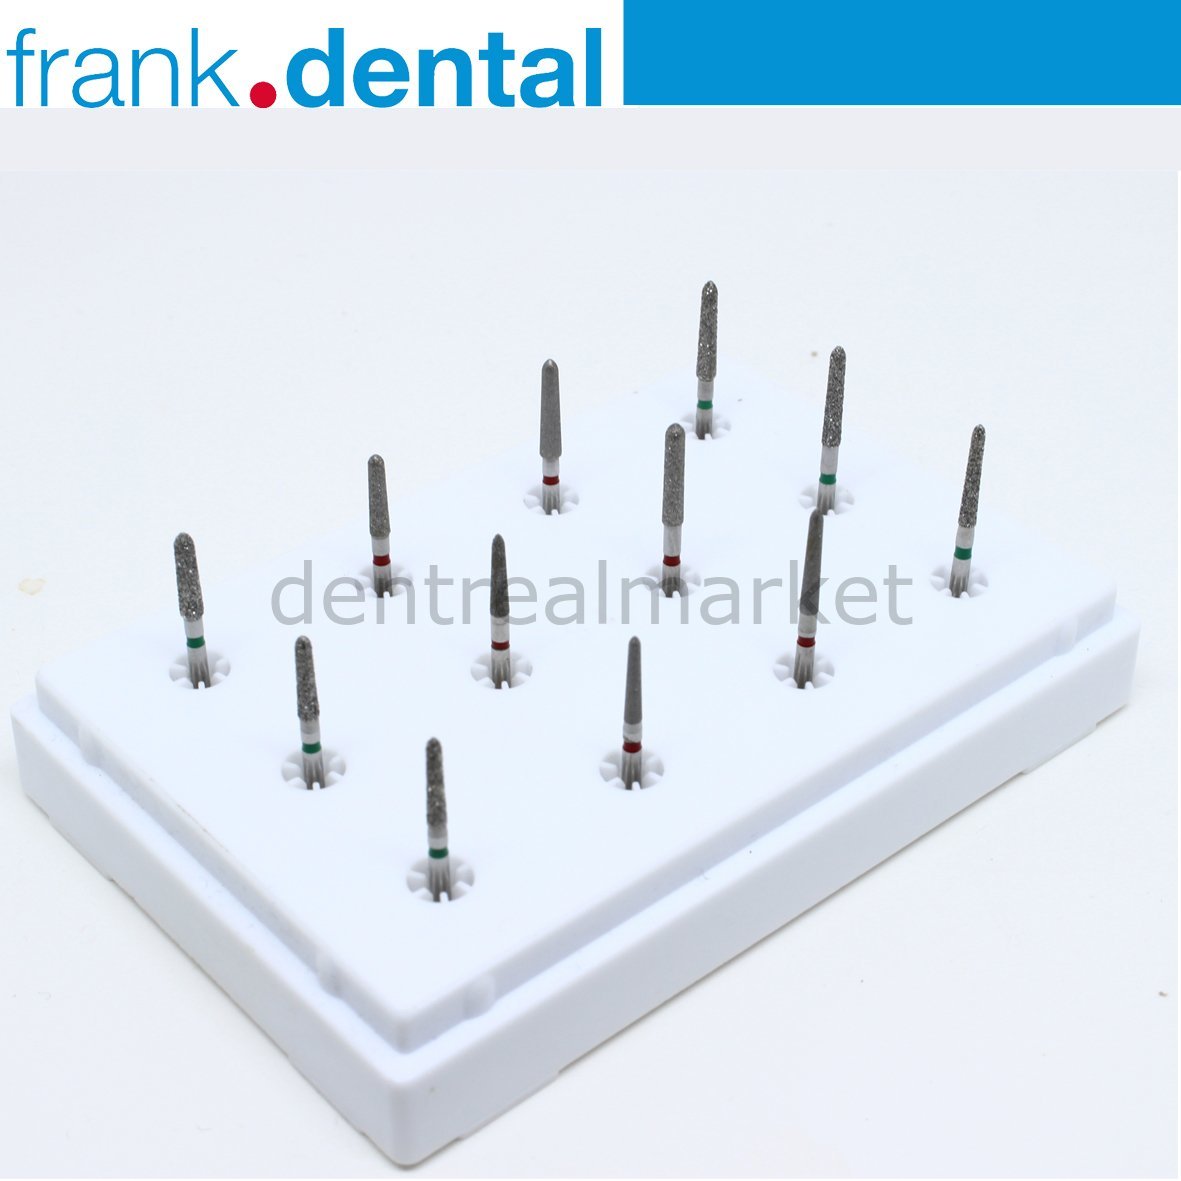 DentrealStore - Frank Dental Diamond Conical Chamfer Cut Bur Set